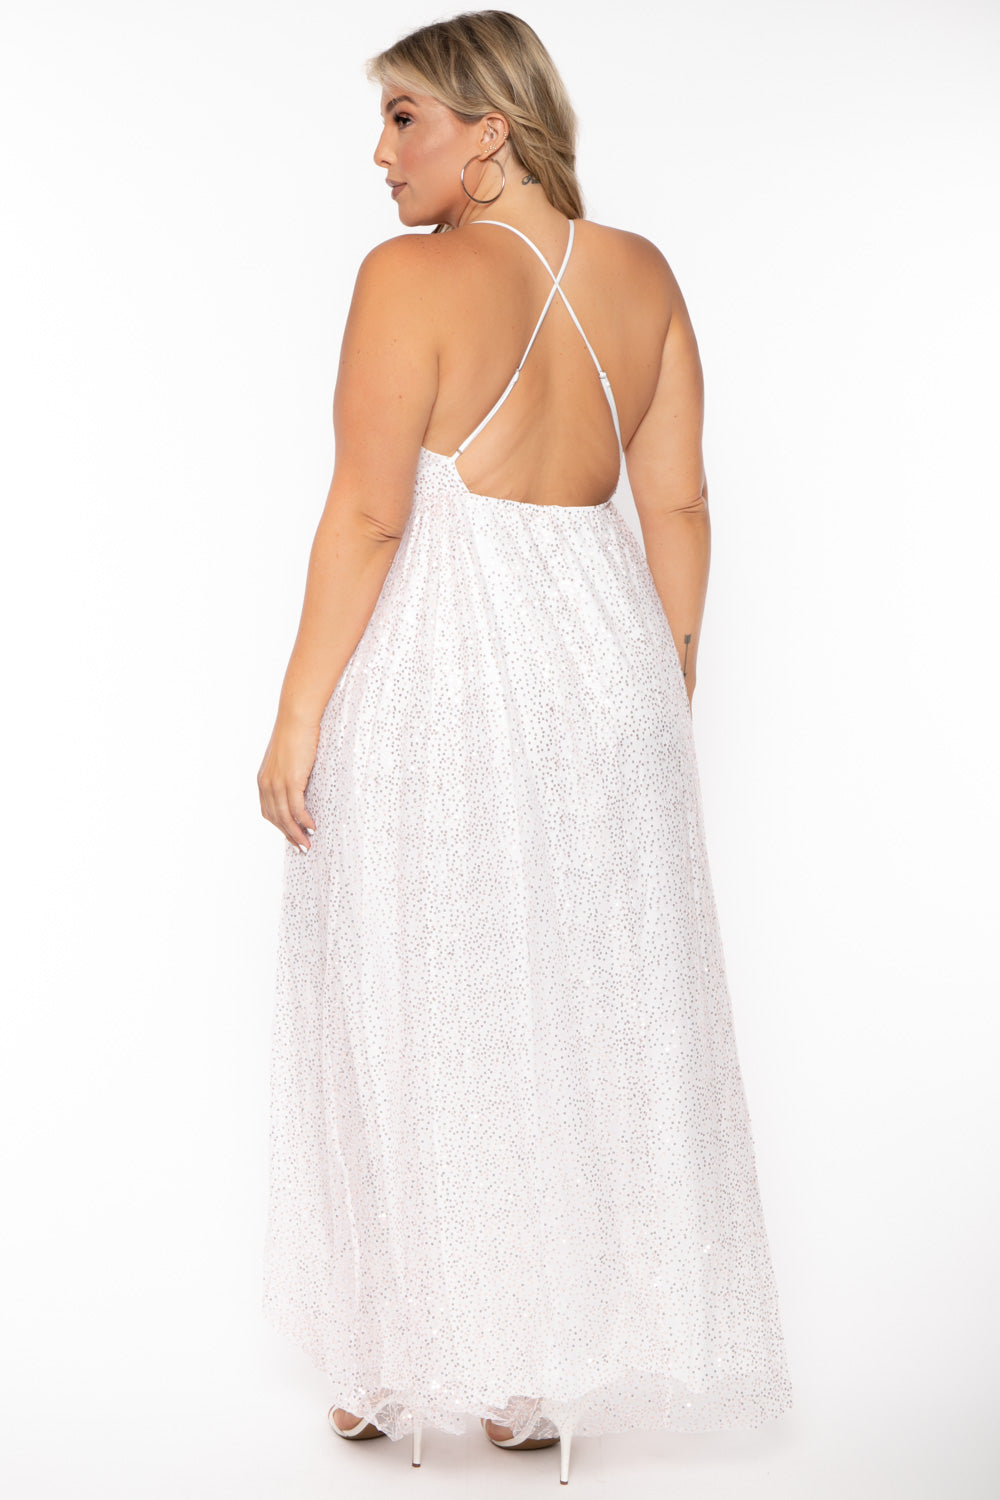 Women's Plus Size Anaira Maxi Glitter Dress - White - Curvy Sense